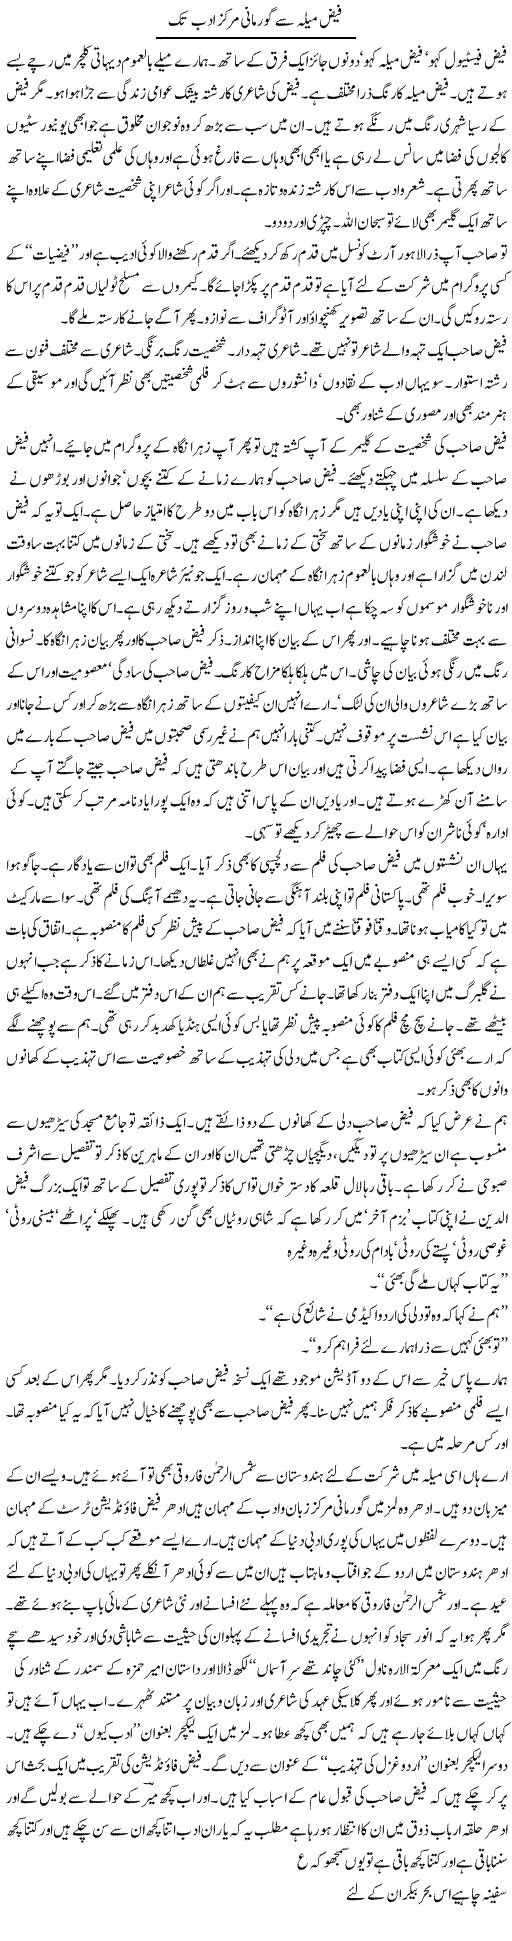 Faiz Mela se gormani mrkaz adab tak | Intizar Hussain | Daily Urdu Columns